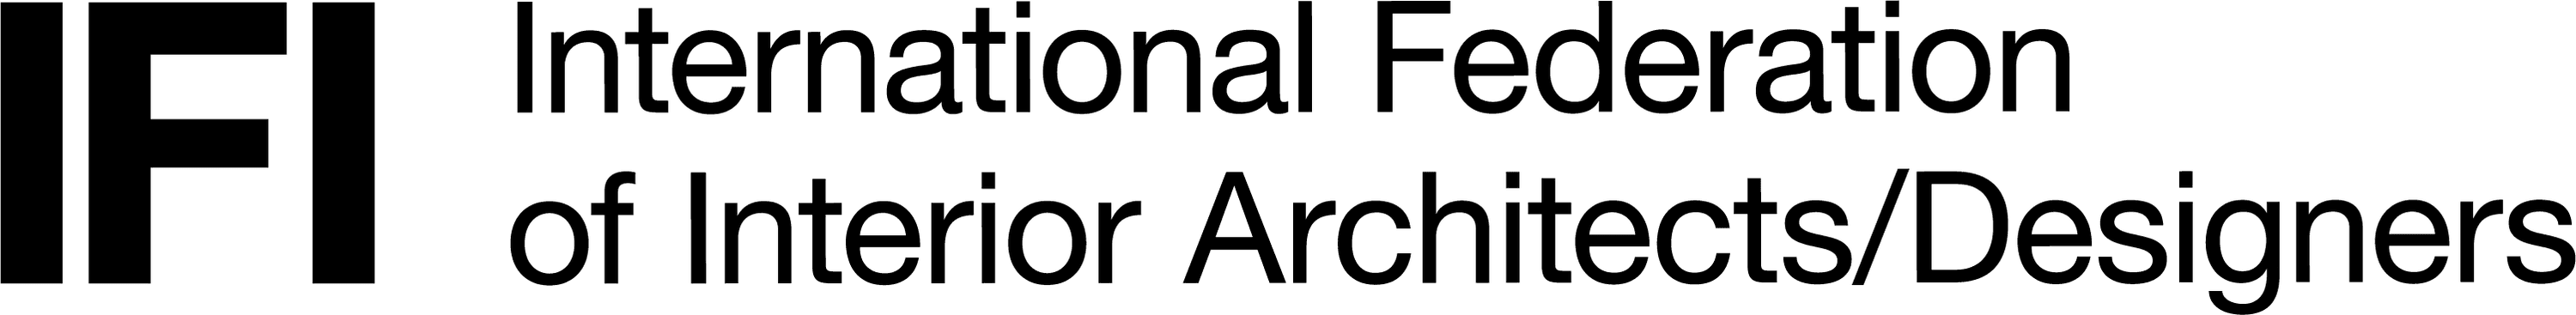 IFI – International Federation of Interior Architects/Designers